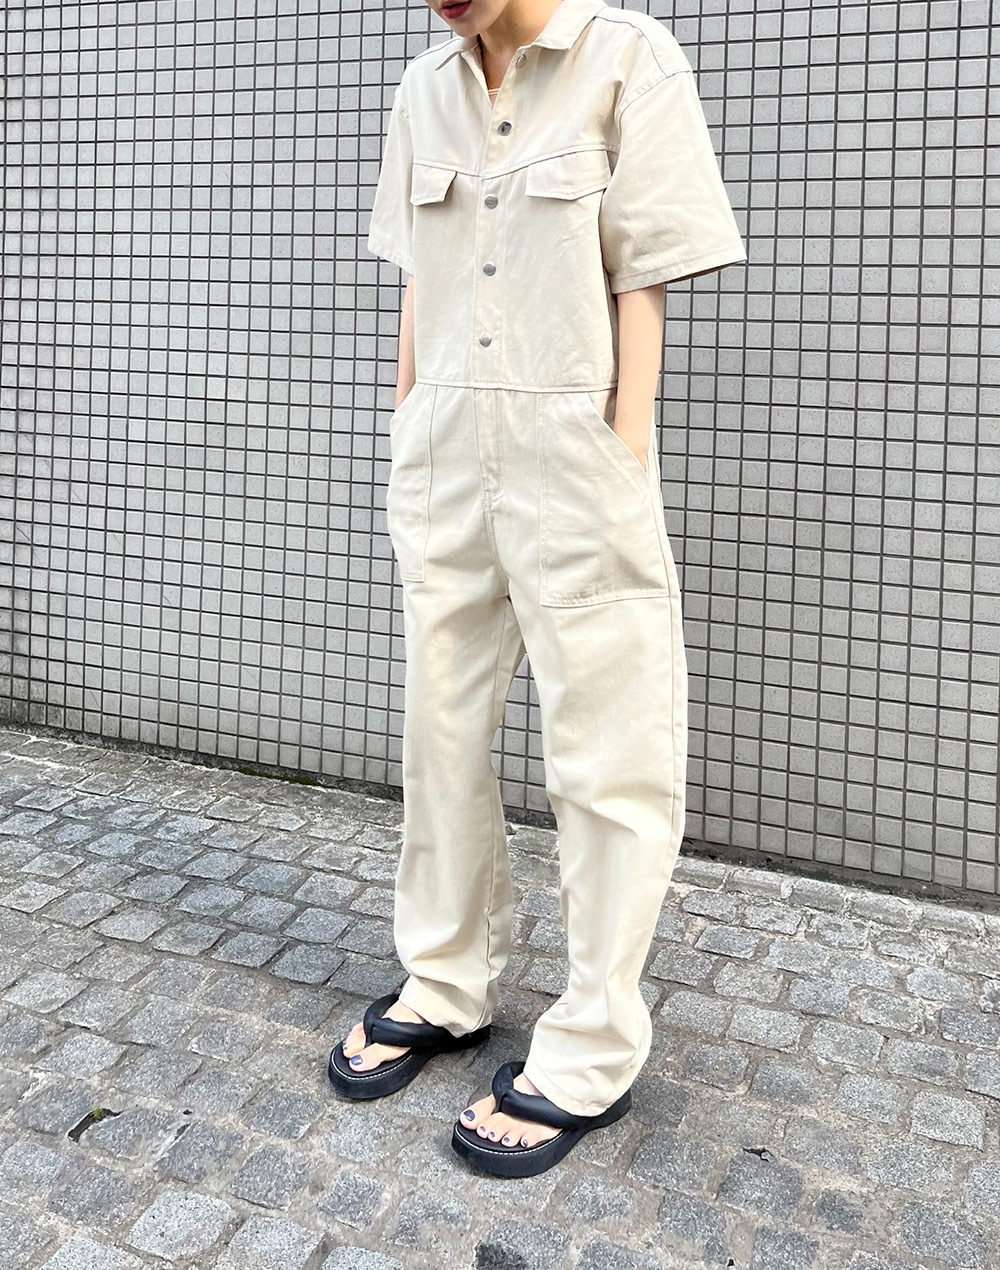 amazone jump suit・t280797（パンツ/オールインワン）| hanjji | 東京ガールズマーケット